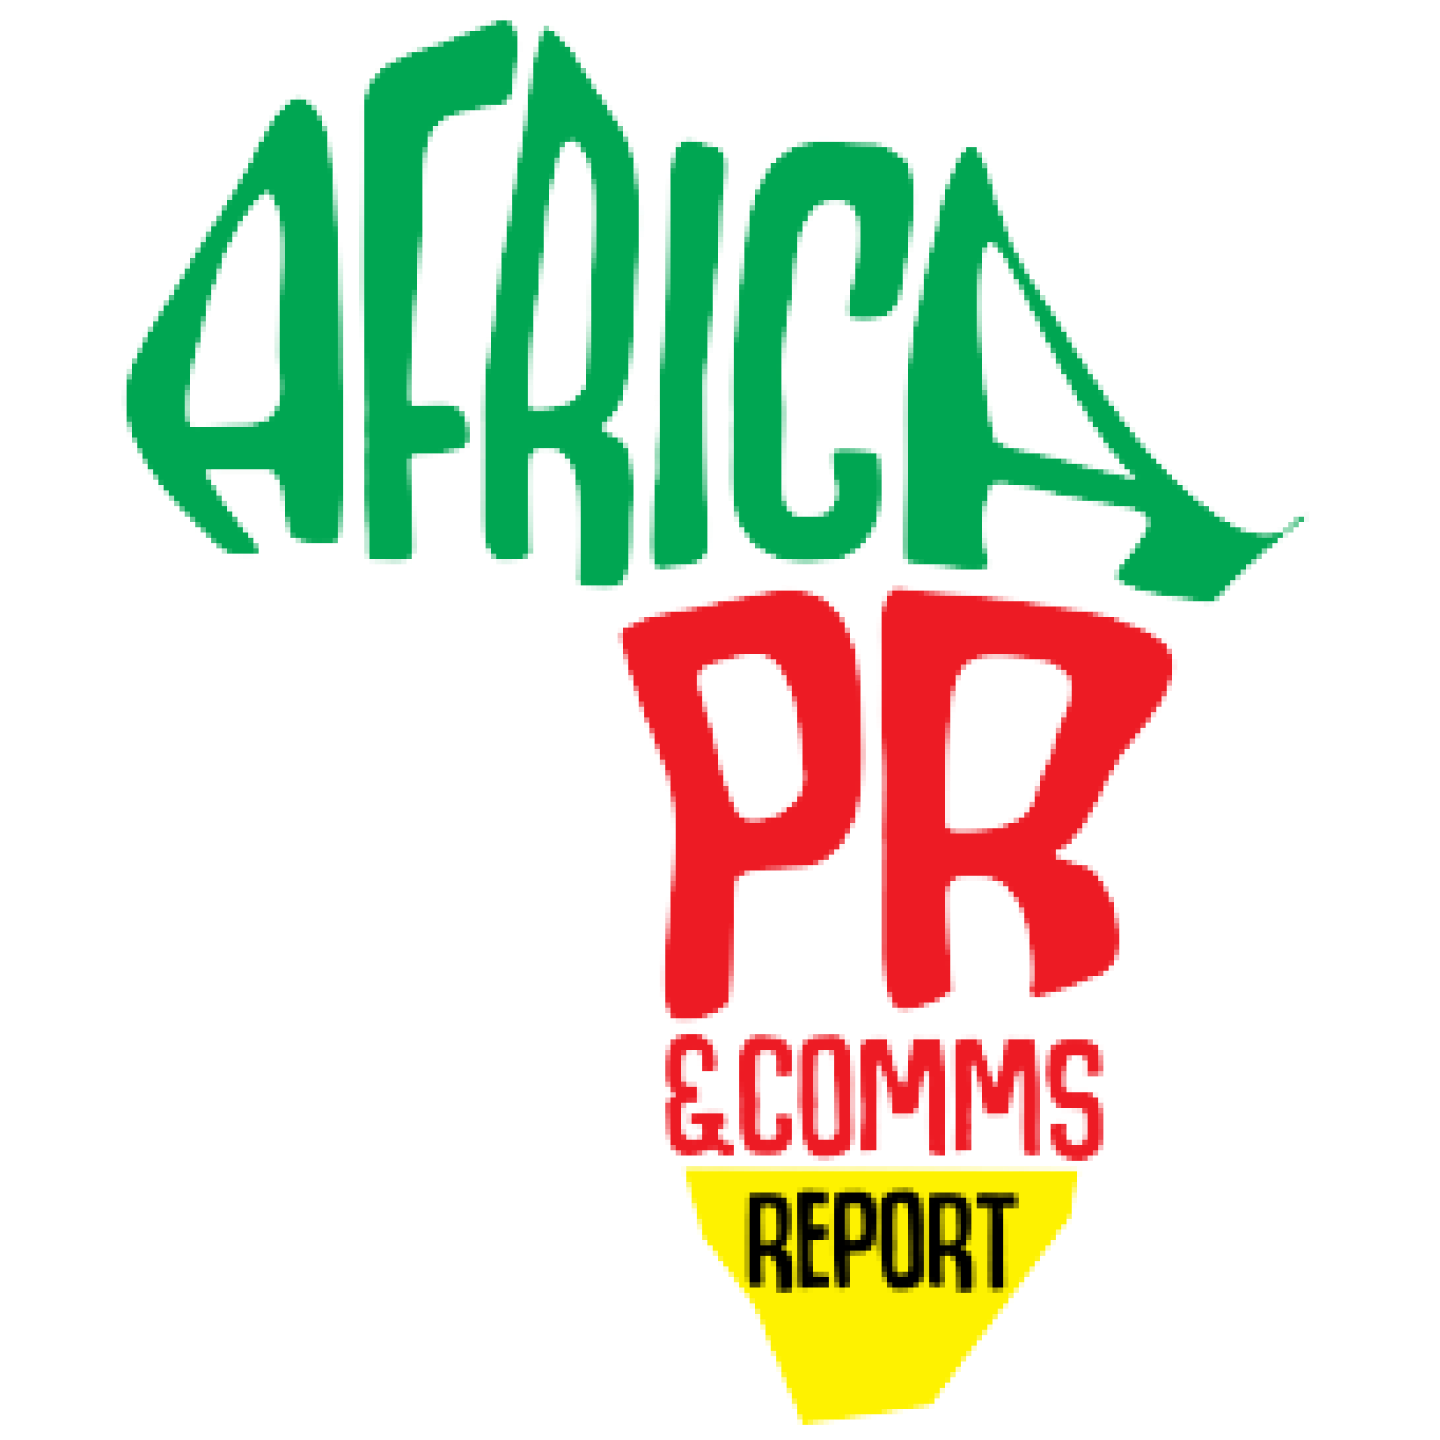 Africa PR & Communications Report